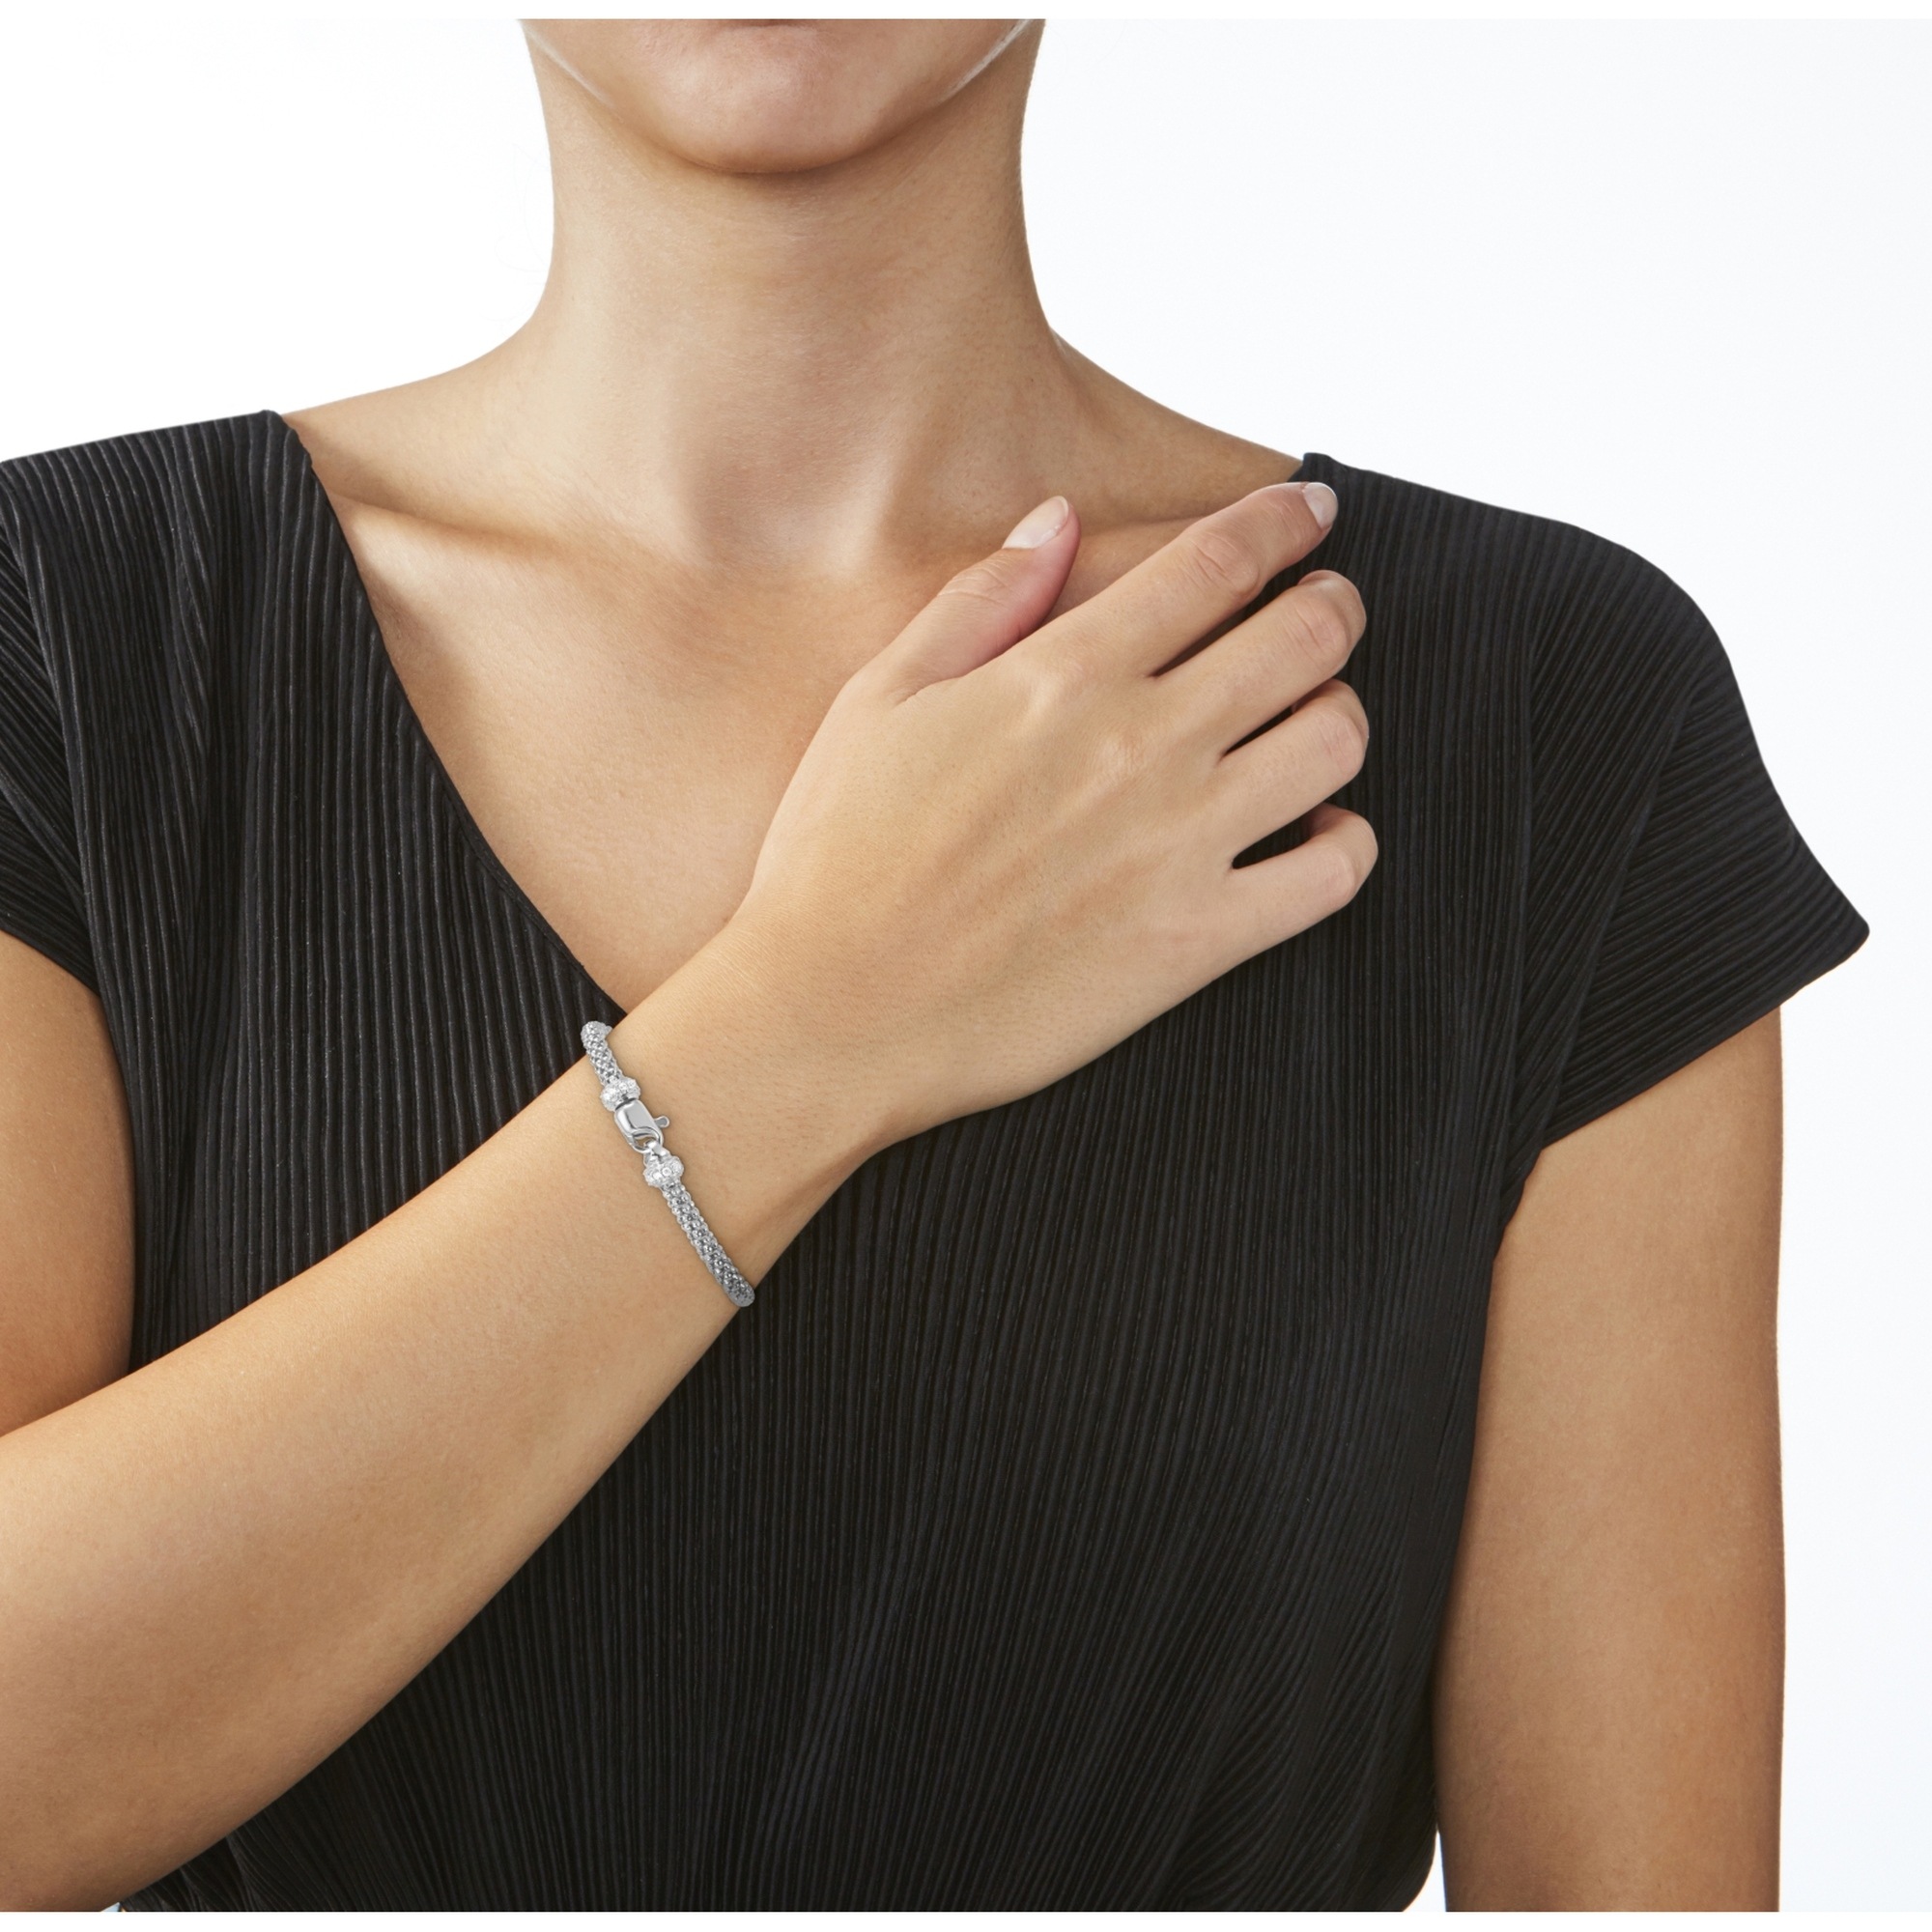 Smart Jewel Armband »Armband Himbeerkette, Zirkonia Steine, Silber 925«